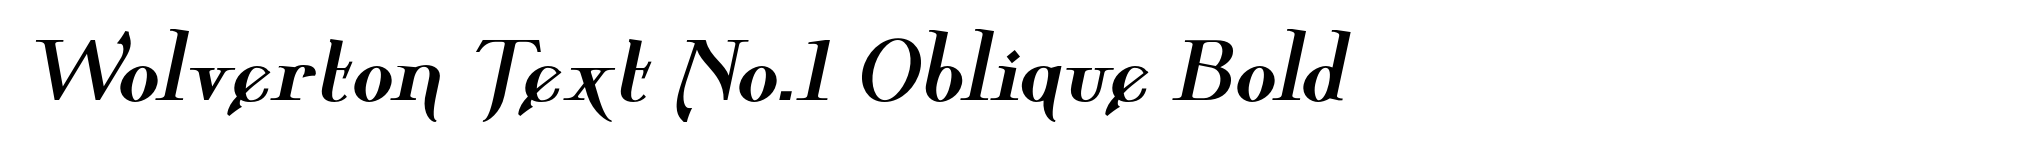 Wolverton Text No.1 Oblique Bold image